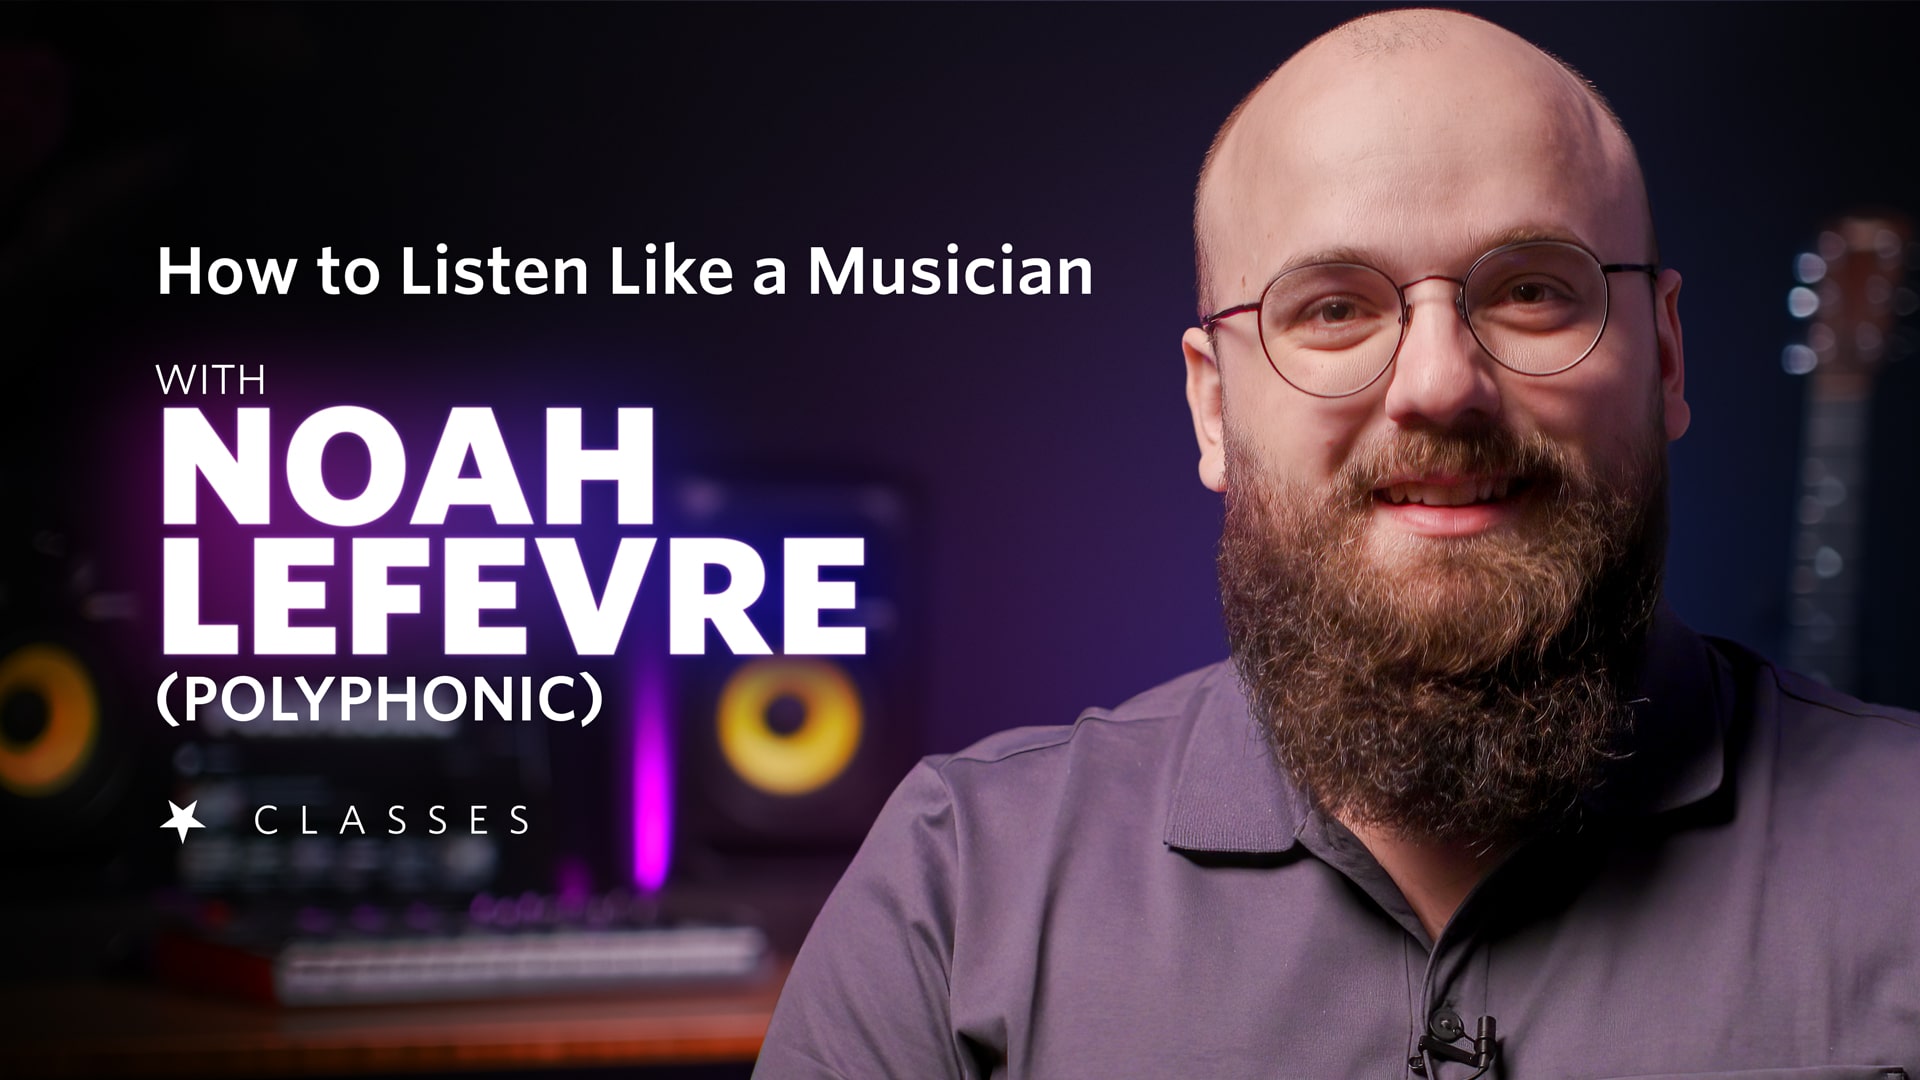 How to Listen like a Musician by Noah Lefevre of Polyphonic, a Nebula Class